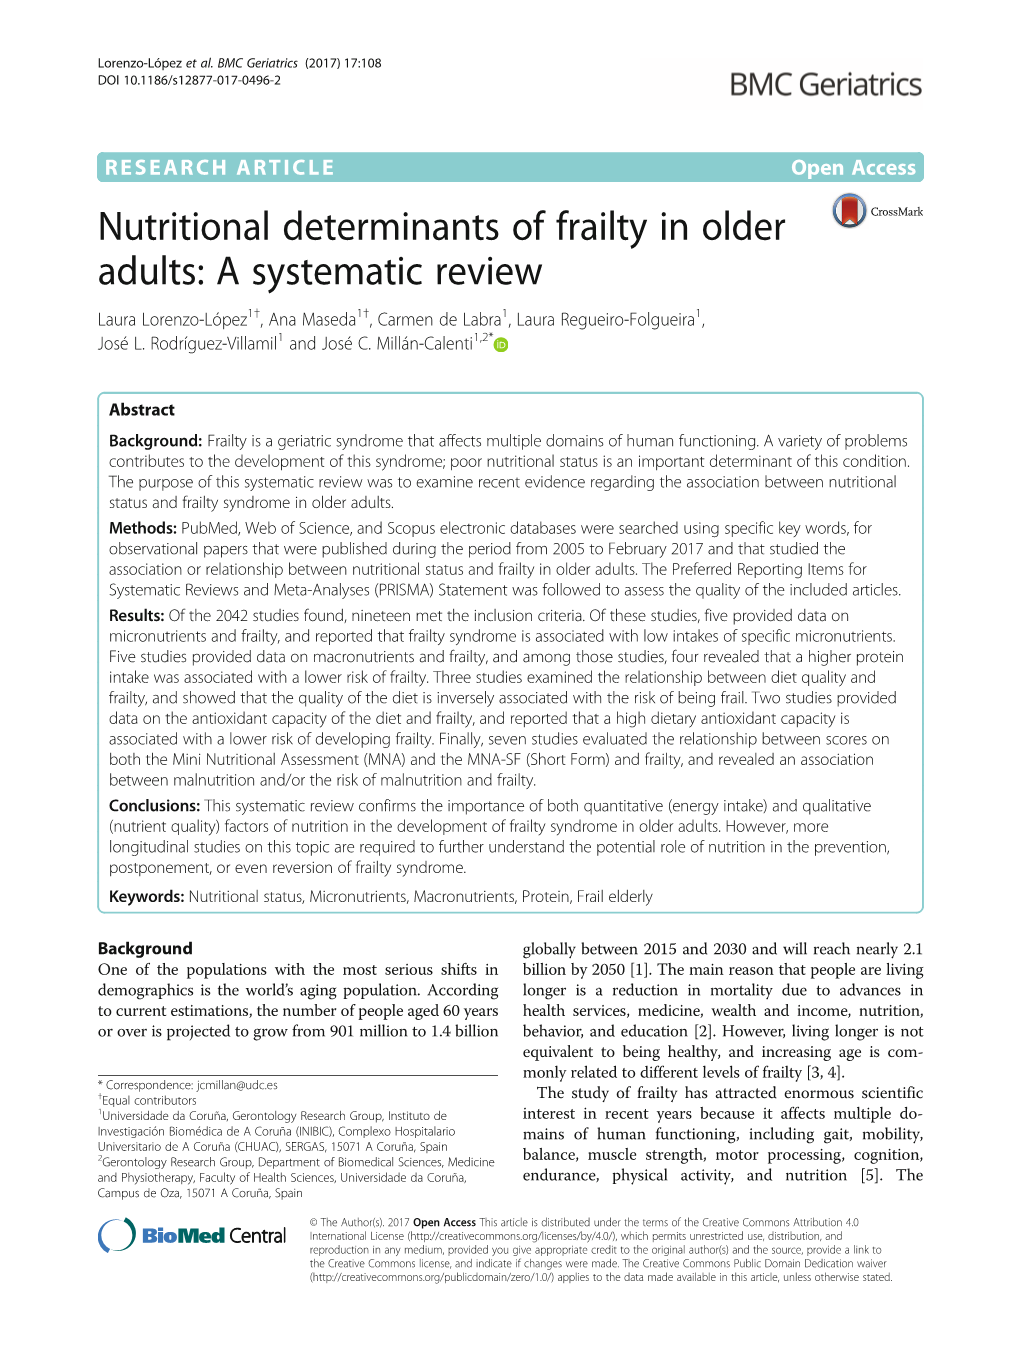 Nutritional Determinants of Frailty in Older Adults: a Systematic Review Laura Lorenzo-López1†, Ana Maseda1†, Carmen De Labra1, Laura Regueiro-Folgueira1, José L